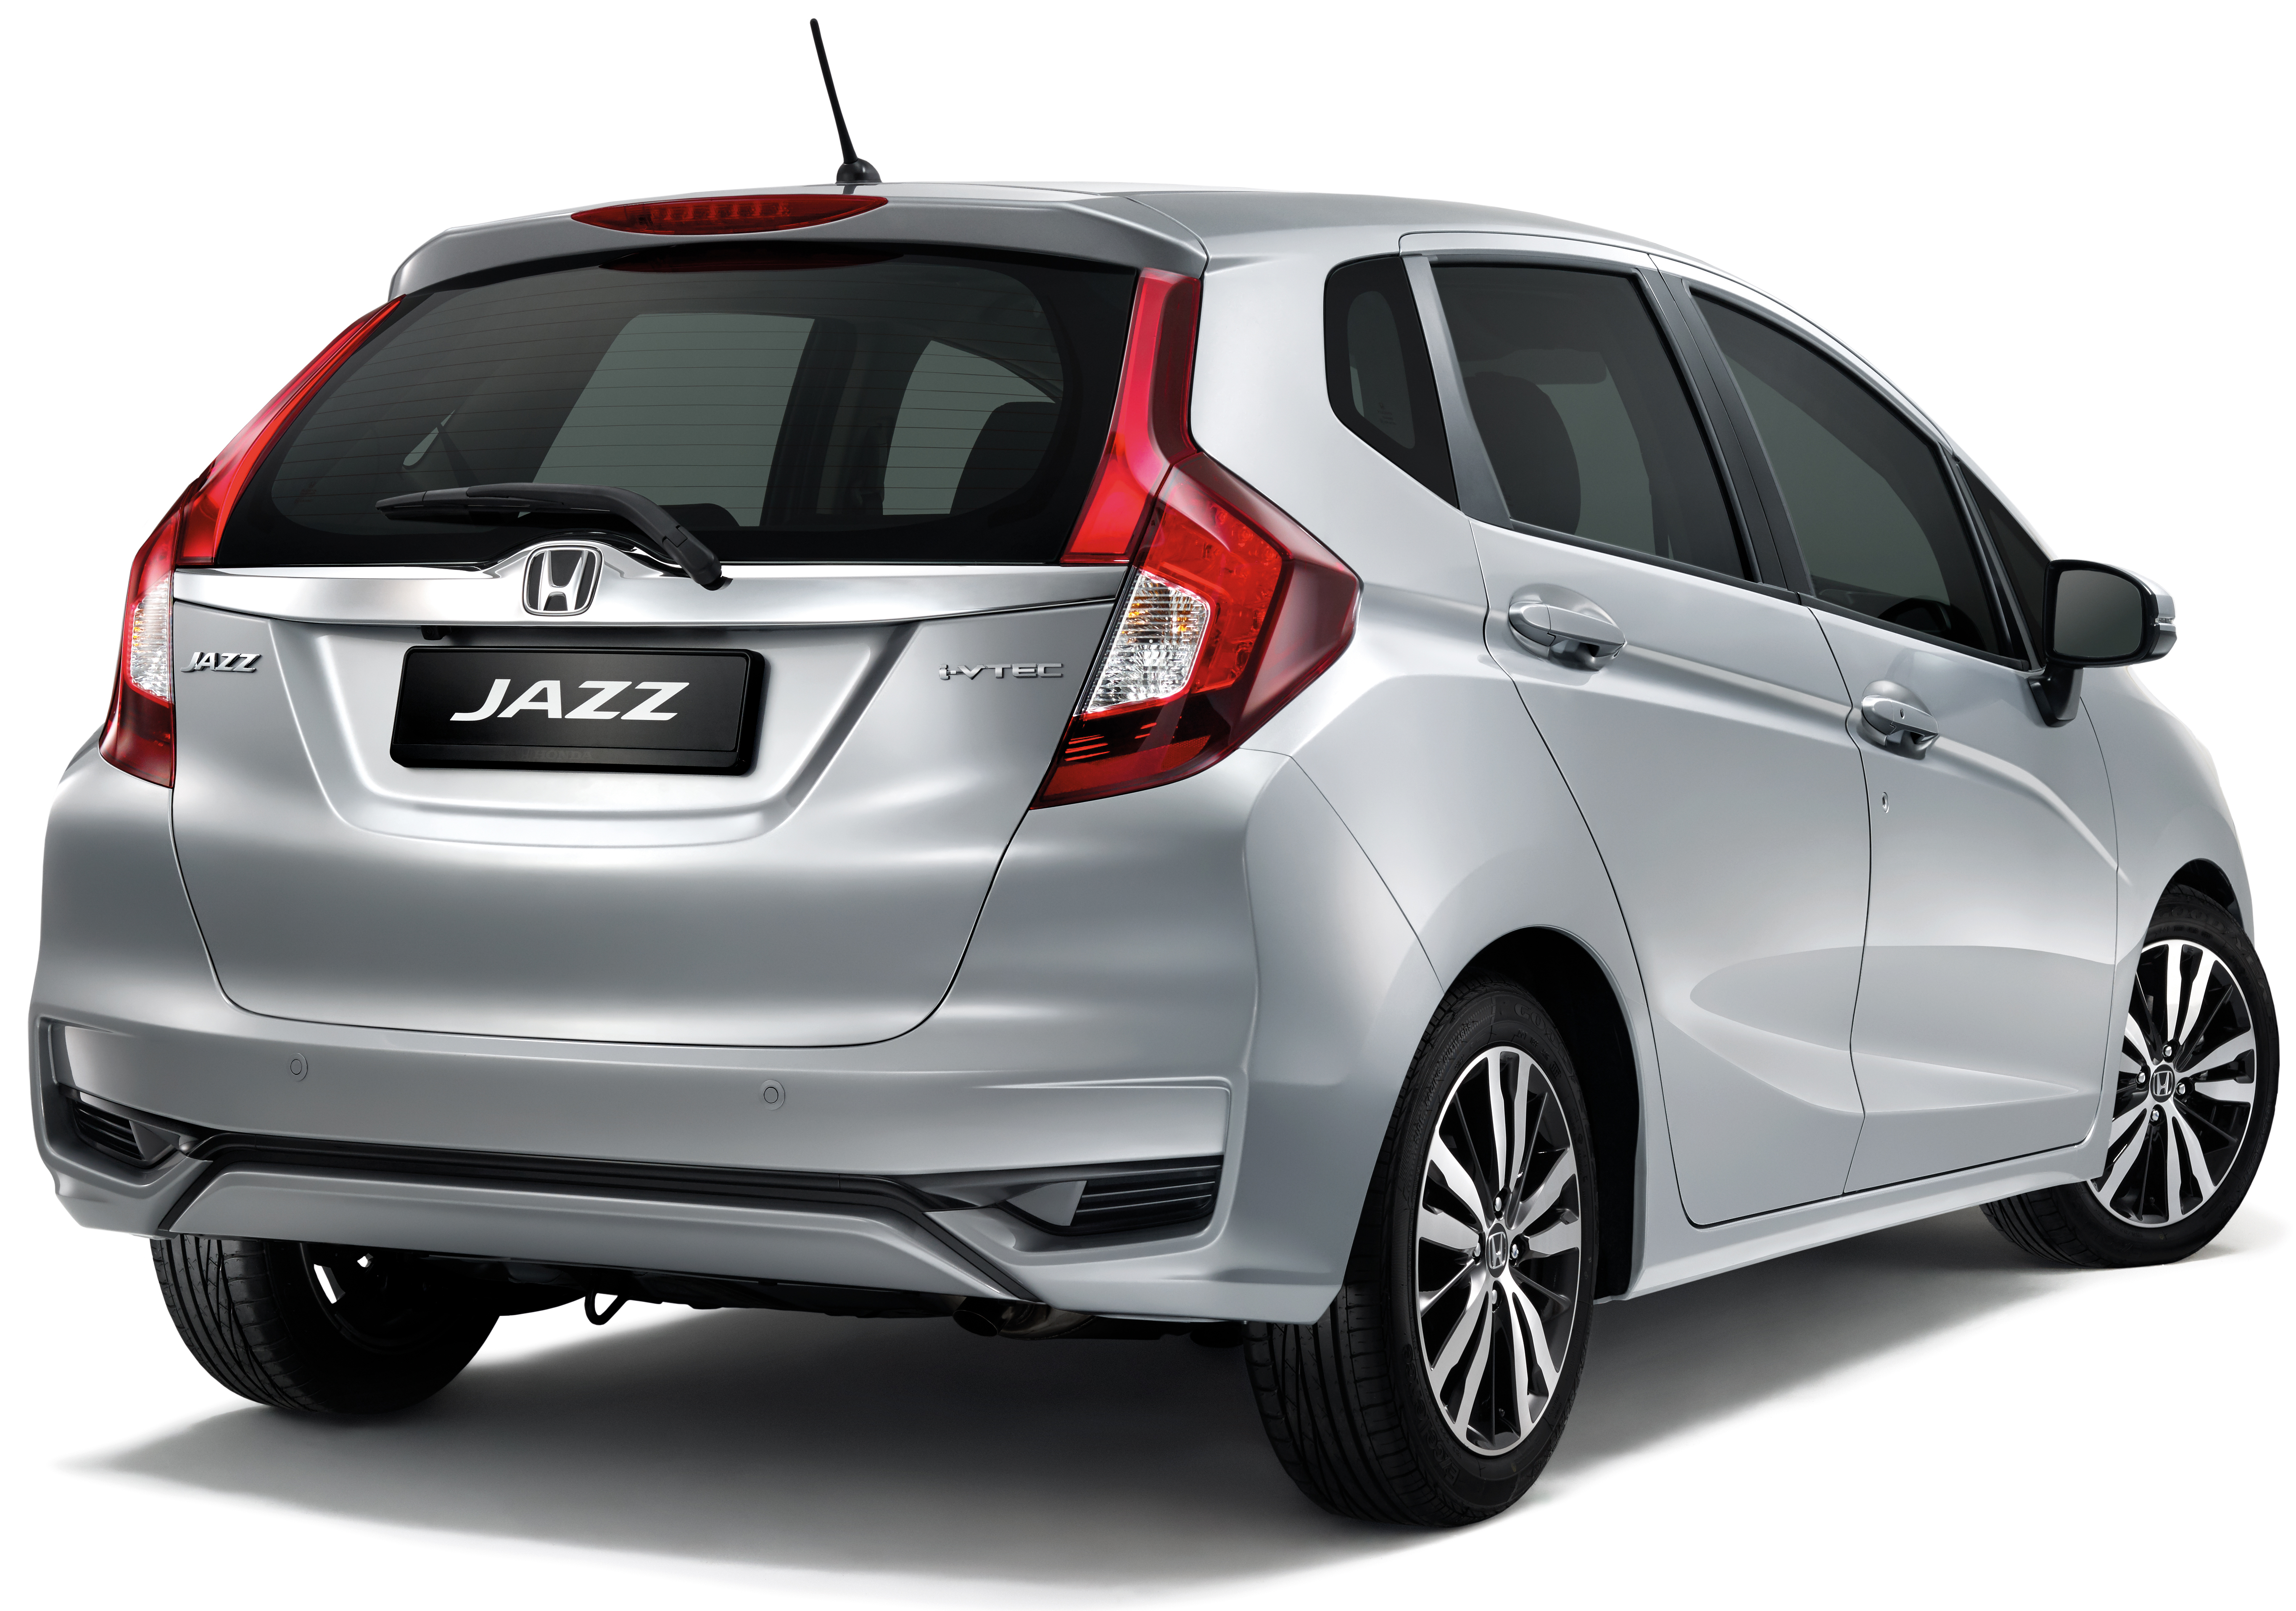 Honda Jazz facelift open for booking petrol model